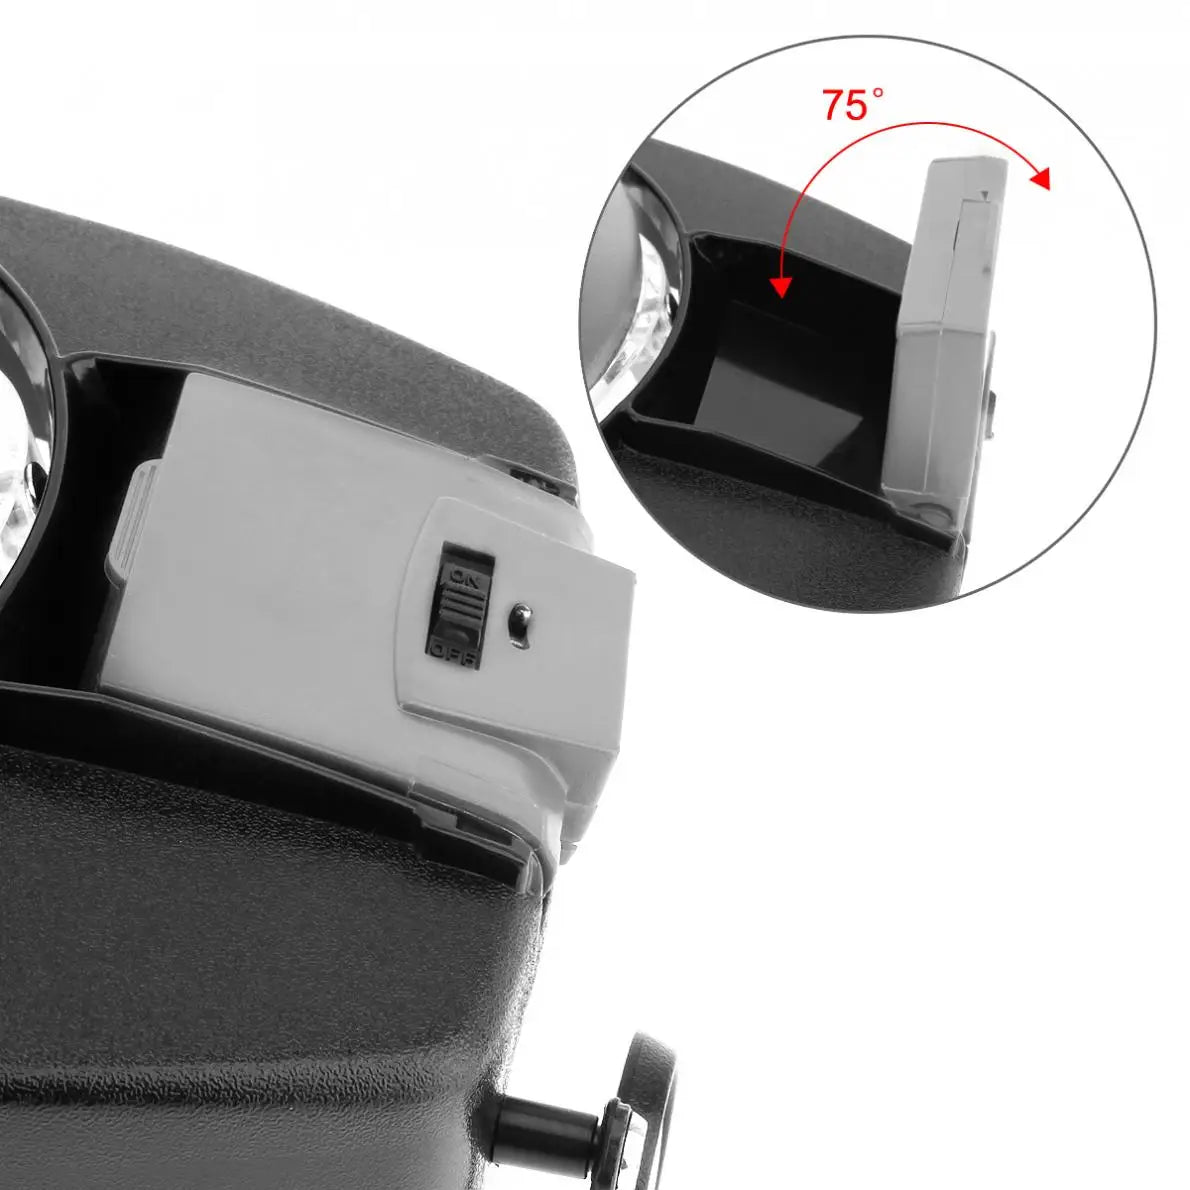 Magnifying Glasses 10X ABS Black + Gray Headband Magnifier Head Magnifying Glass Lens Loupe